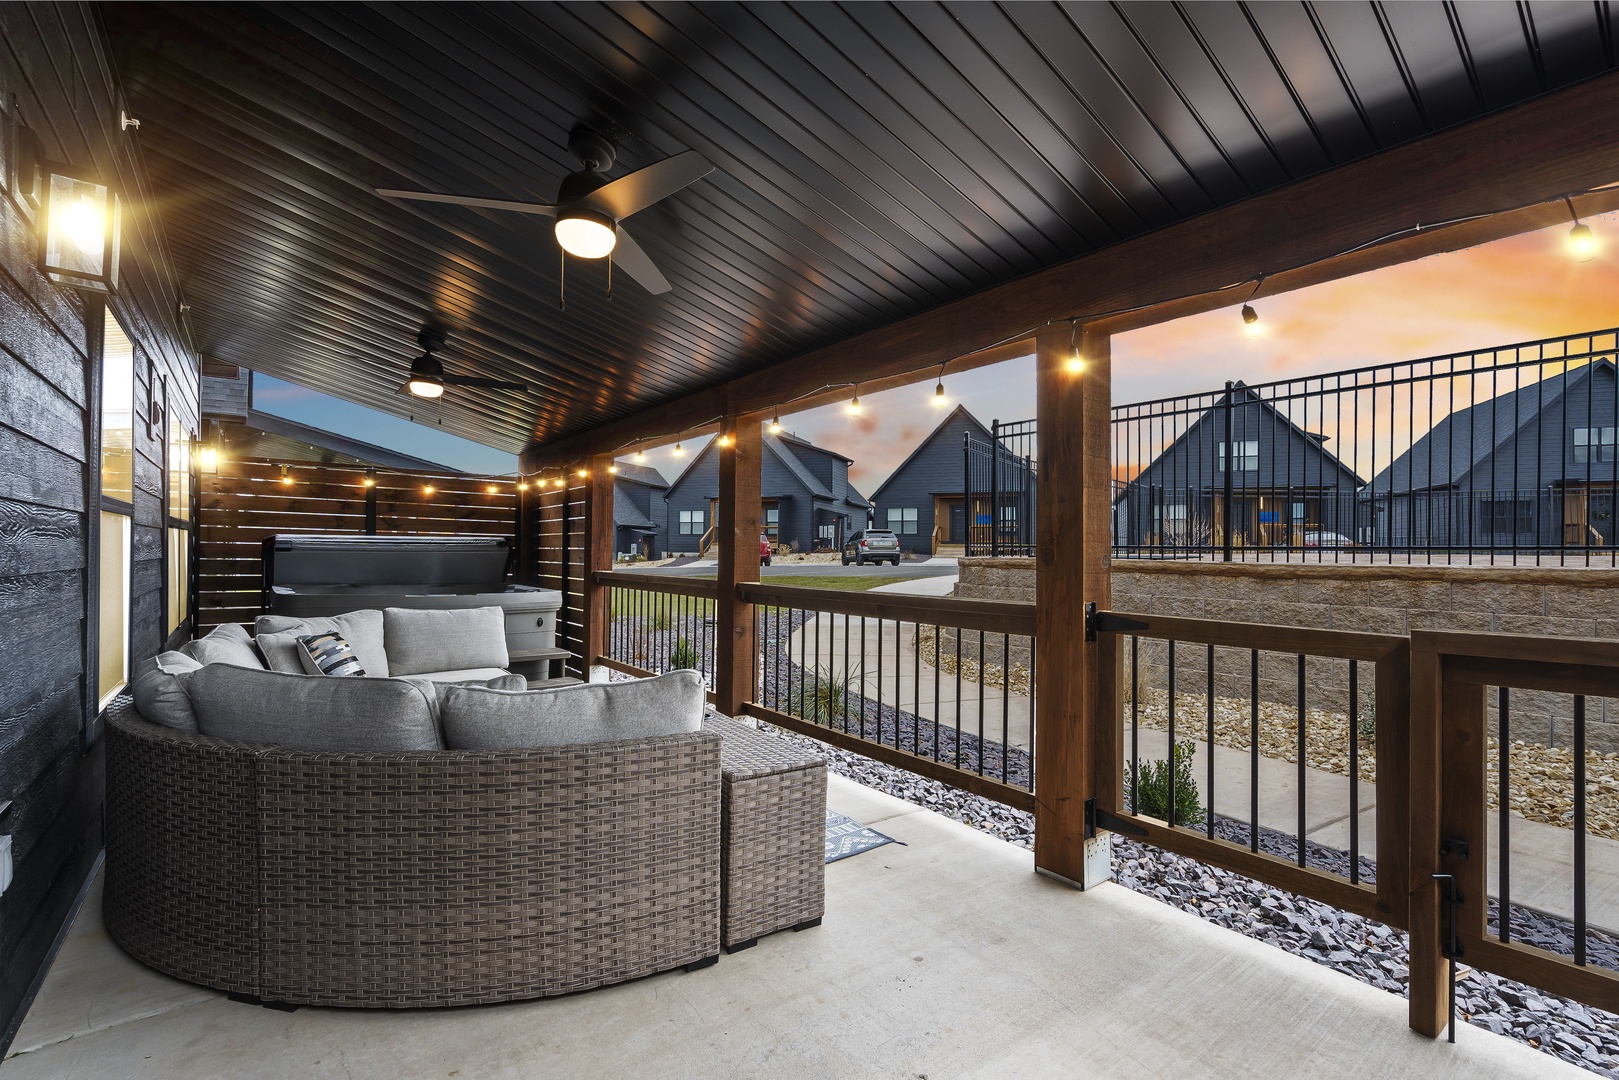 Lounge the day away on the patio, enjoying fresh air & pool views